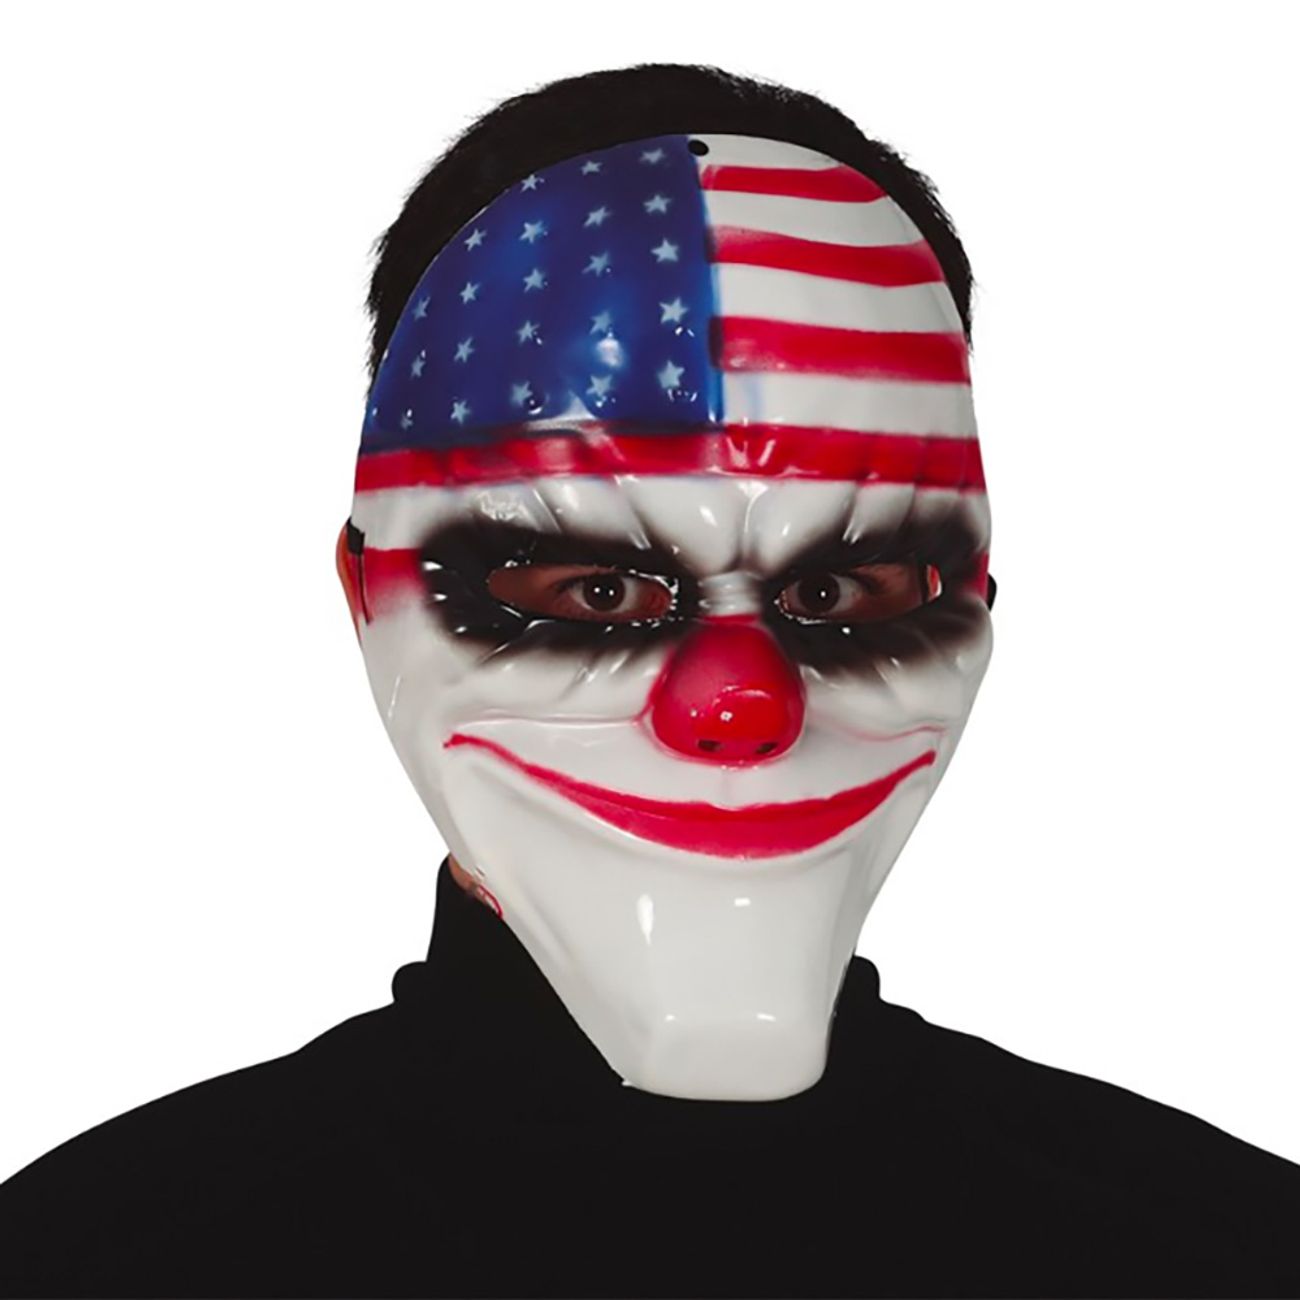 amerikans-clown-mask-82626-1